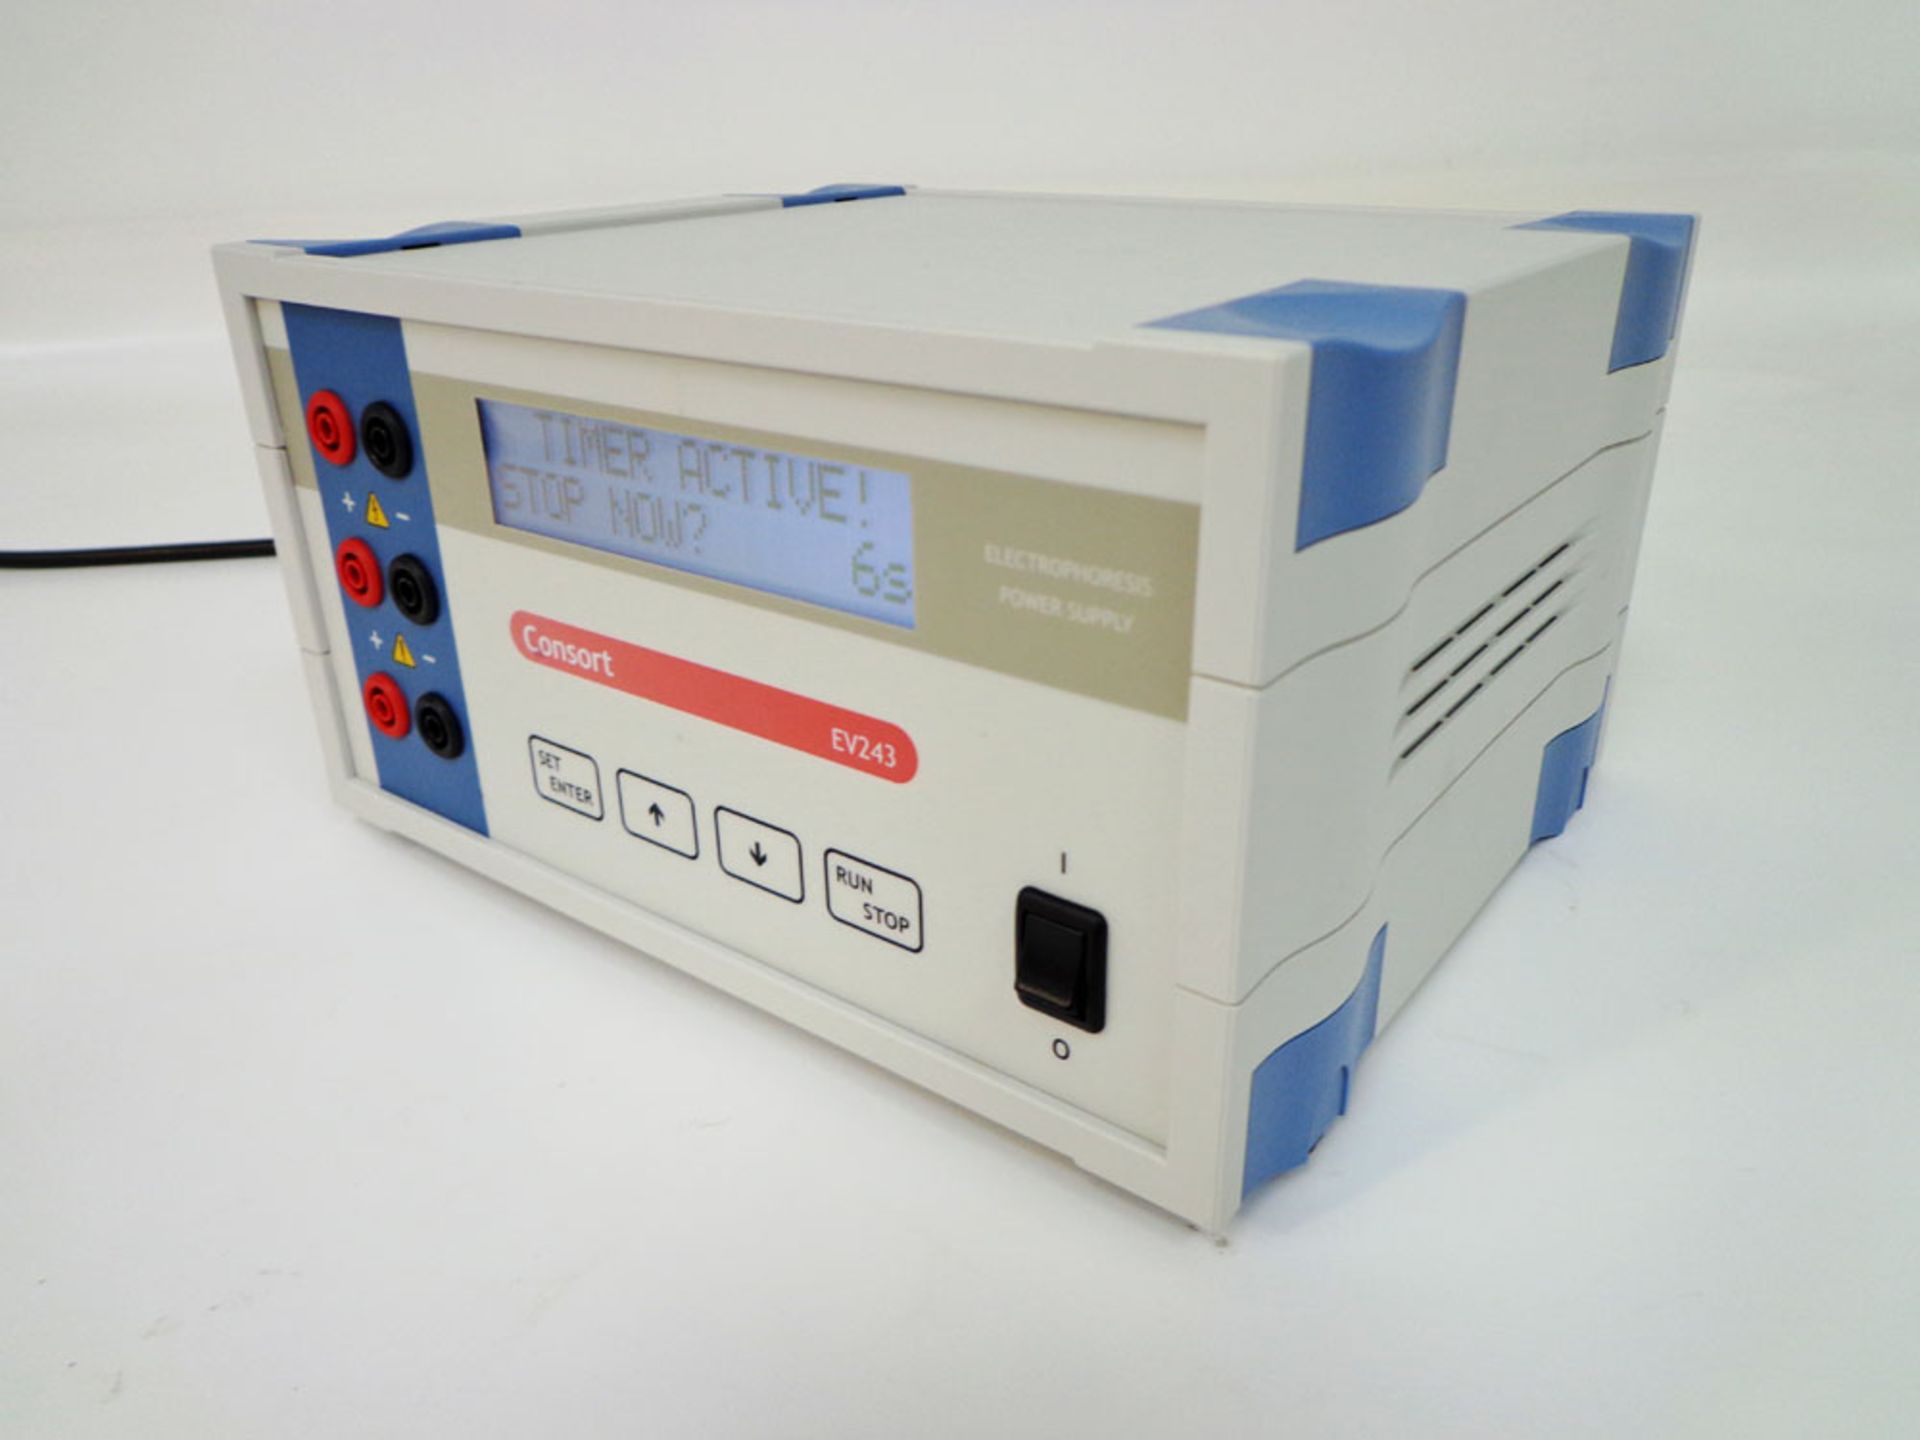 Consort EV231 Electrophoresis Power Supply, serial number 88722 (Ref: WA11811)